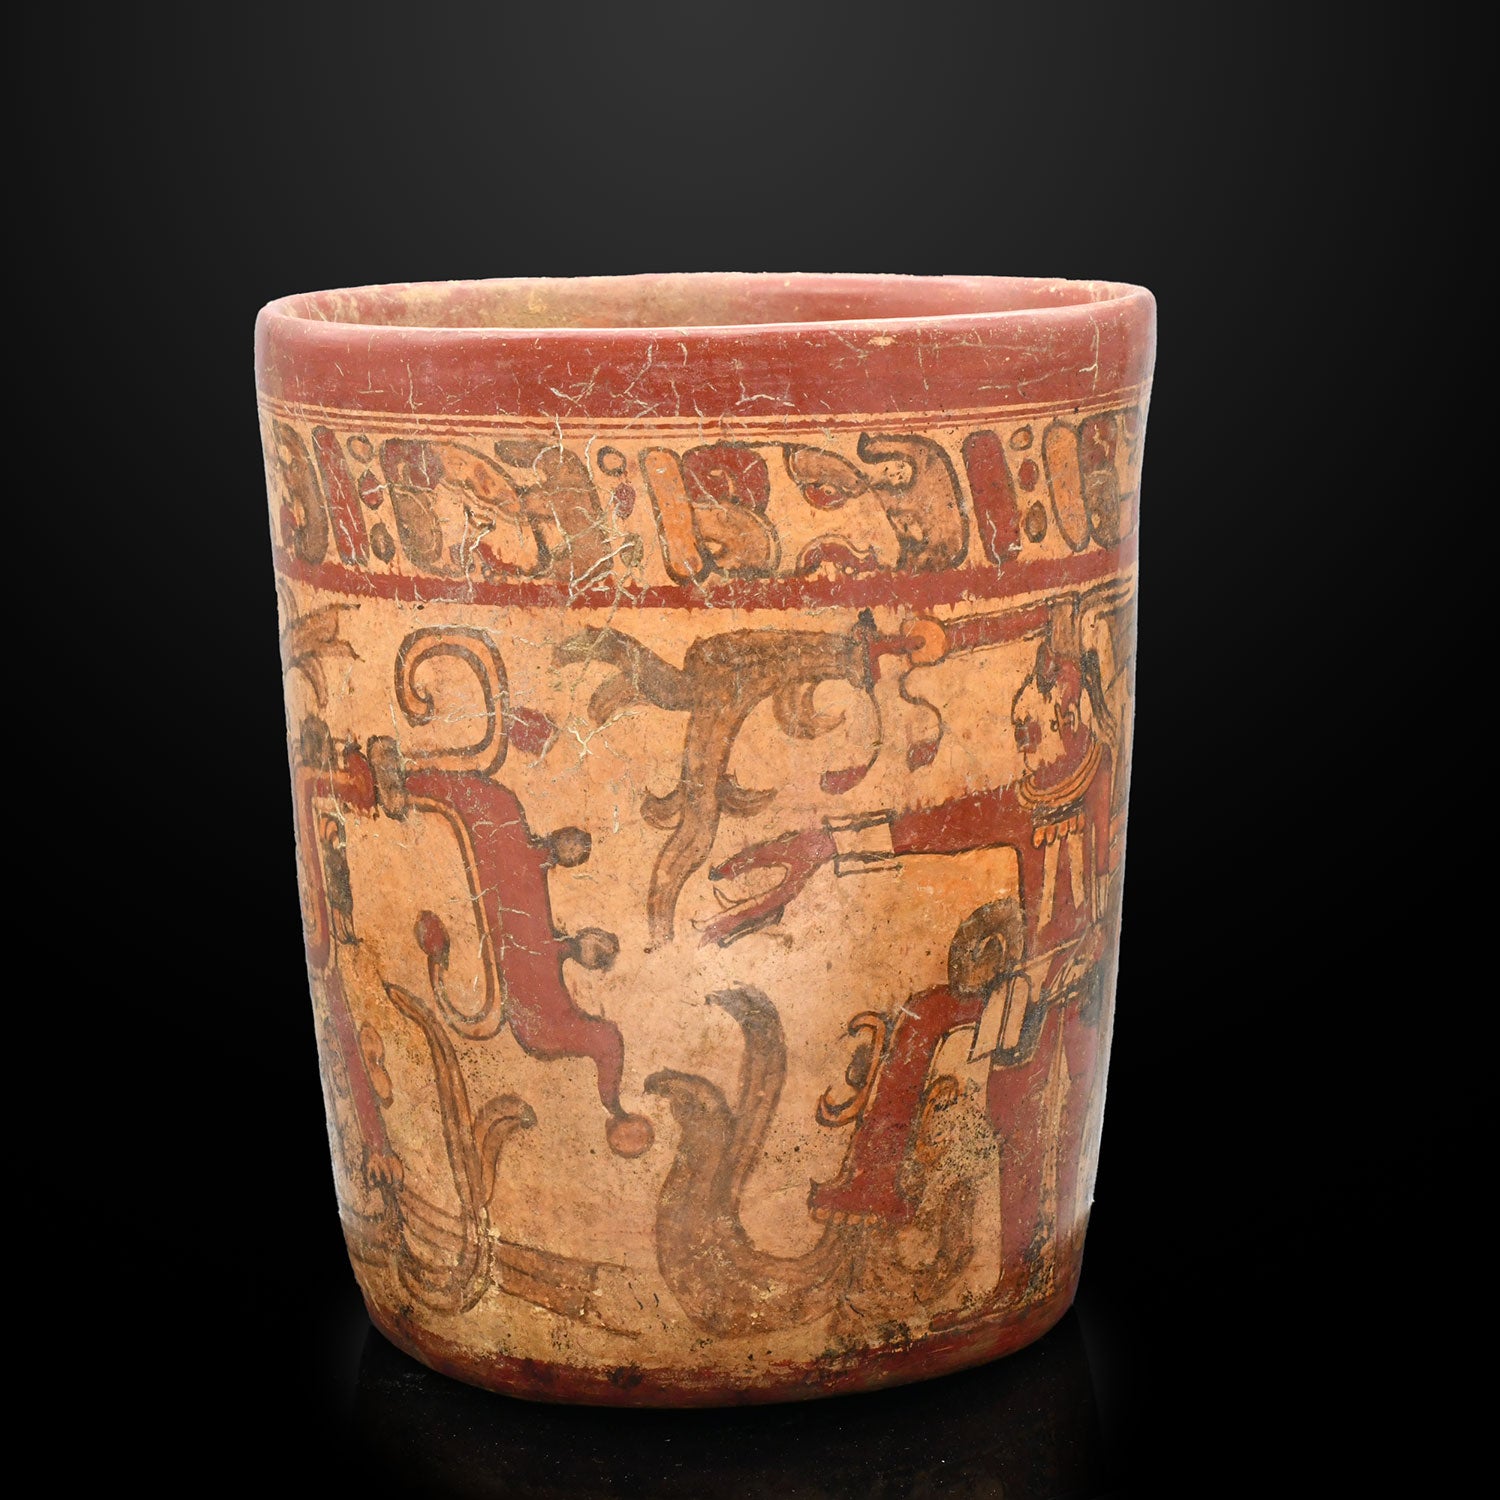 A large Mayan Polychrome Cylinder Vessel, Classic Maya Period, ca. 500 - 800 CE